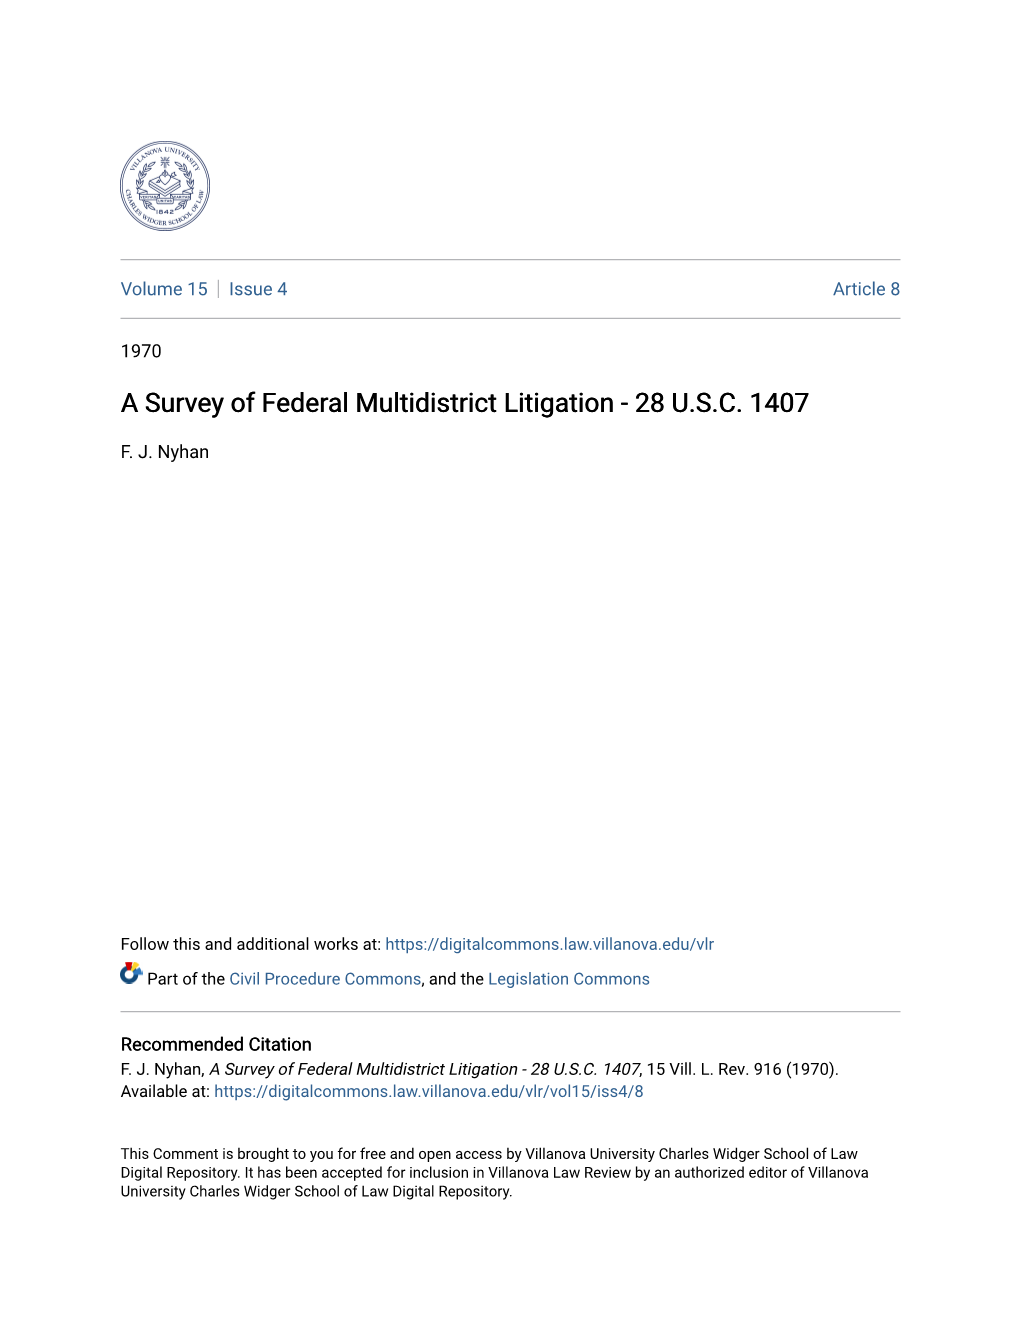 A Survey of Federal Multidistrict Litigation - 28 U.S.C